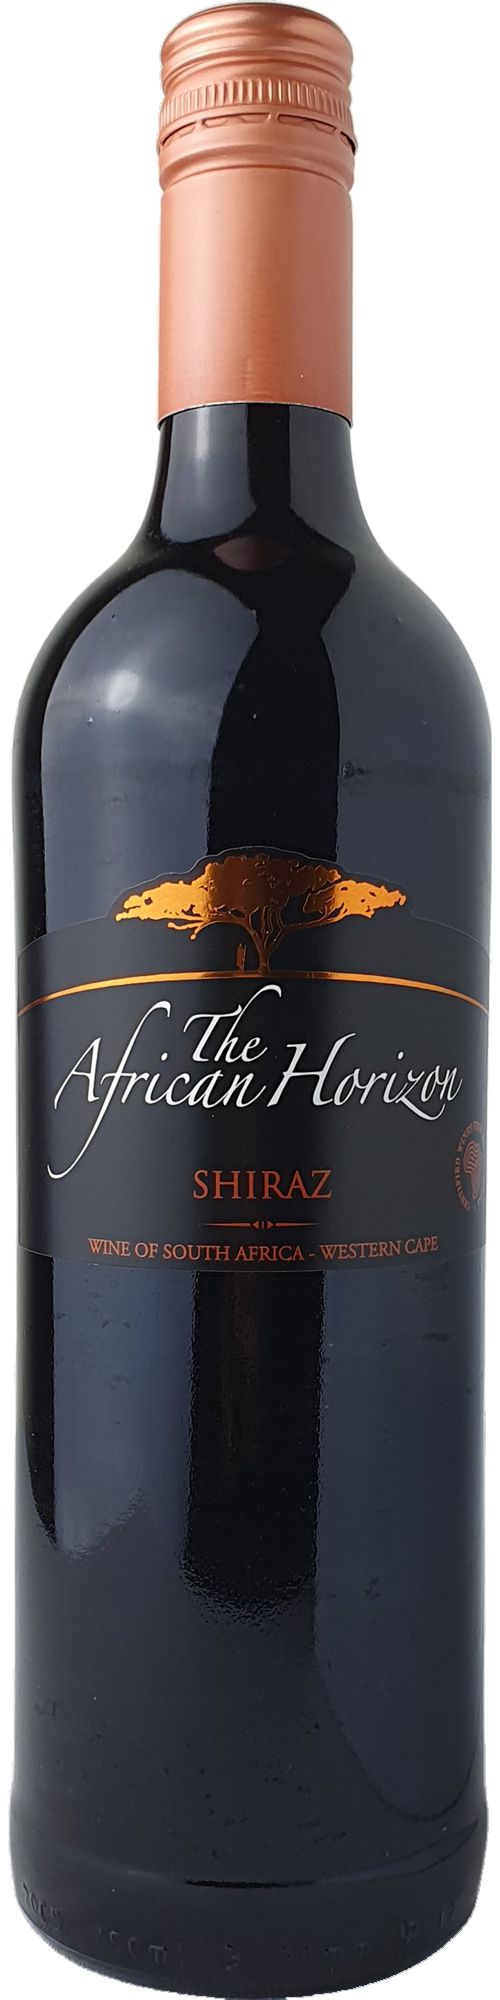 African Horizon Shiraz Rotwein trocken